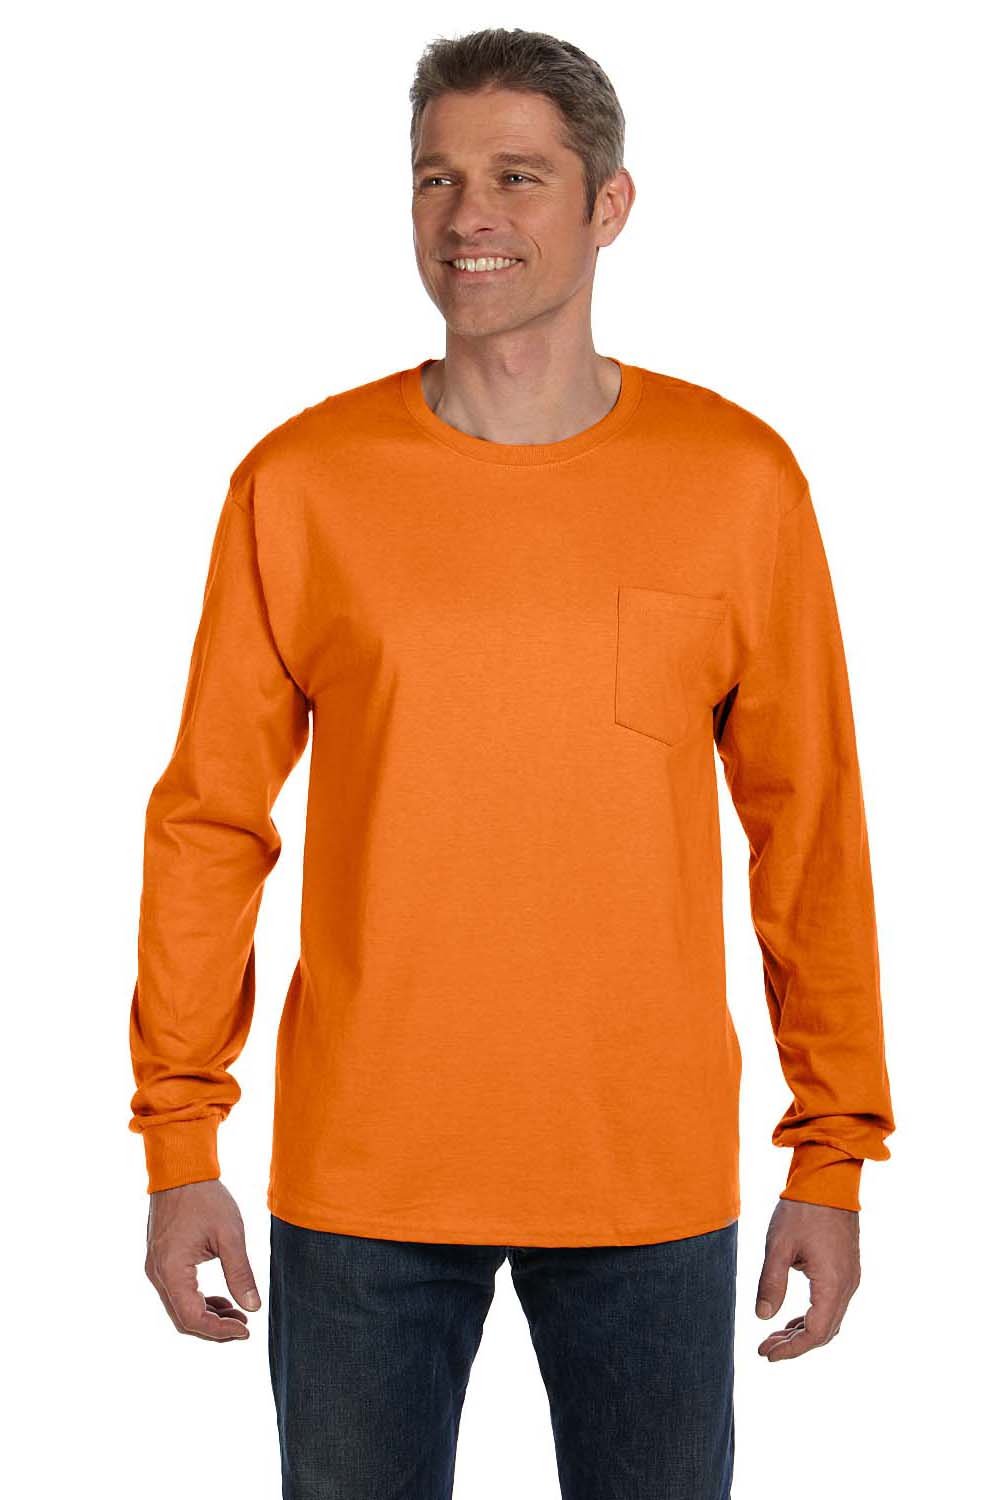 Hanes 5596 Mens ComfortSoft Long Sleeve Crewneck T-Shirt w/ Pocket Orange Front